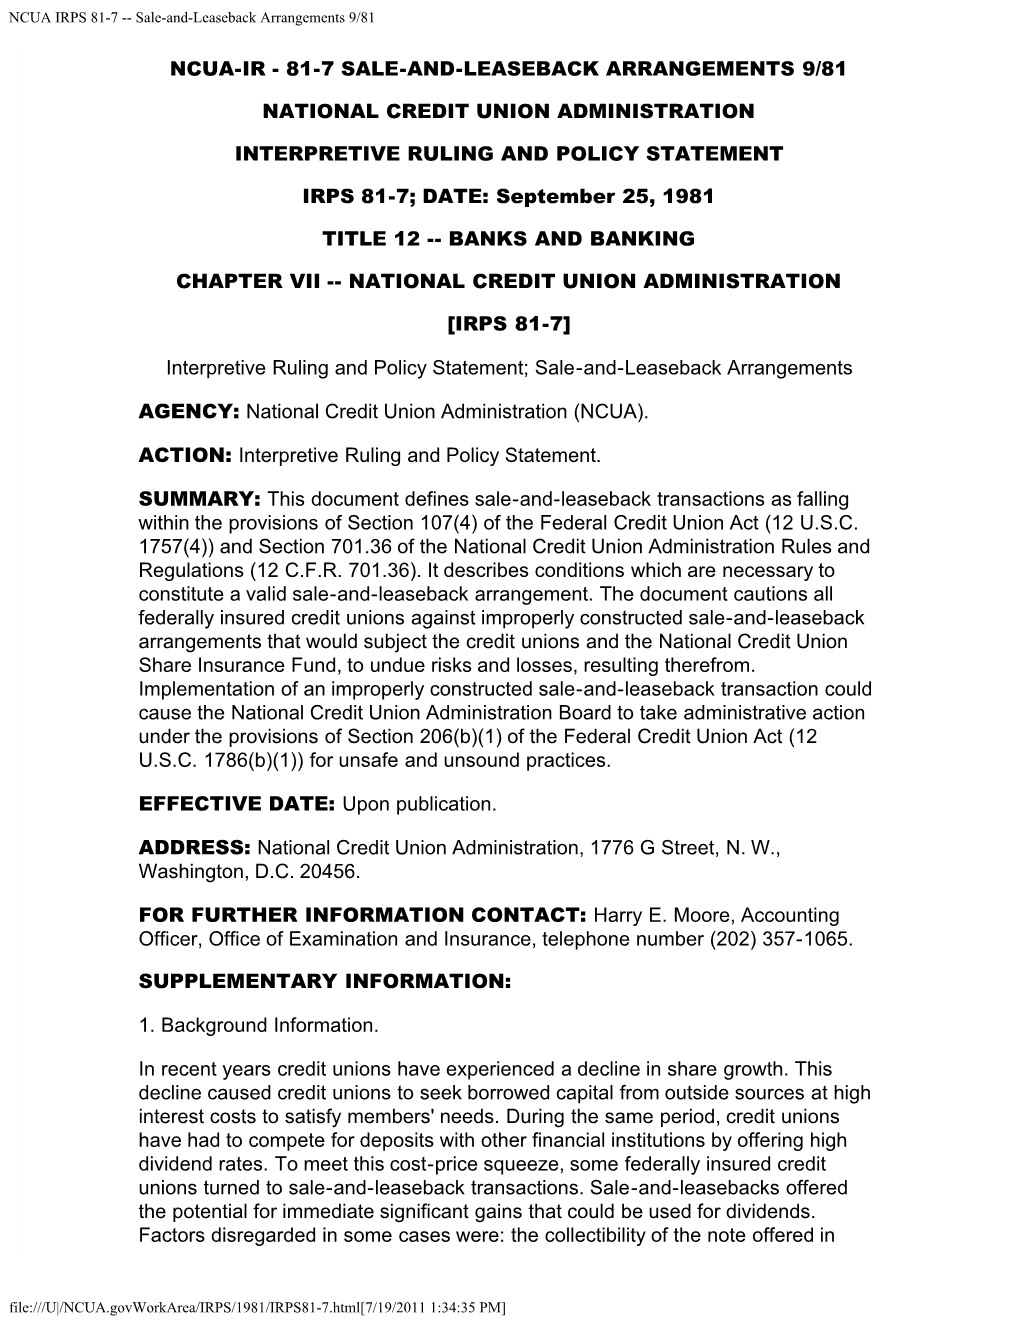 NCUA IRPS 81-7 -- Sale-And-Leaseback Arrangements 9/81